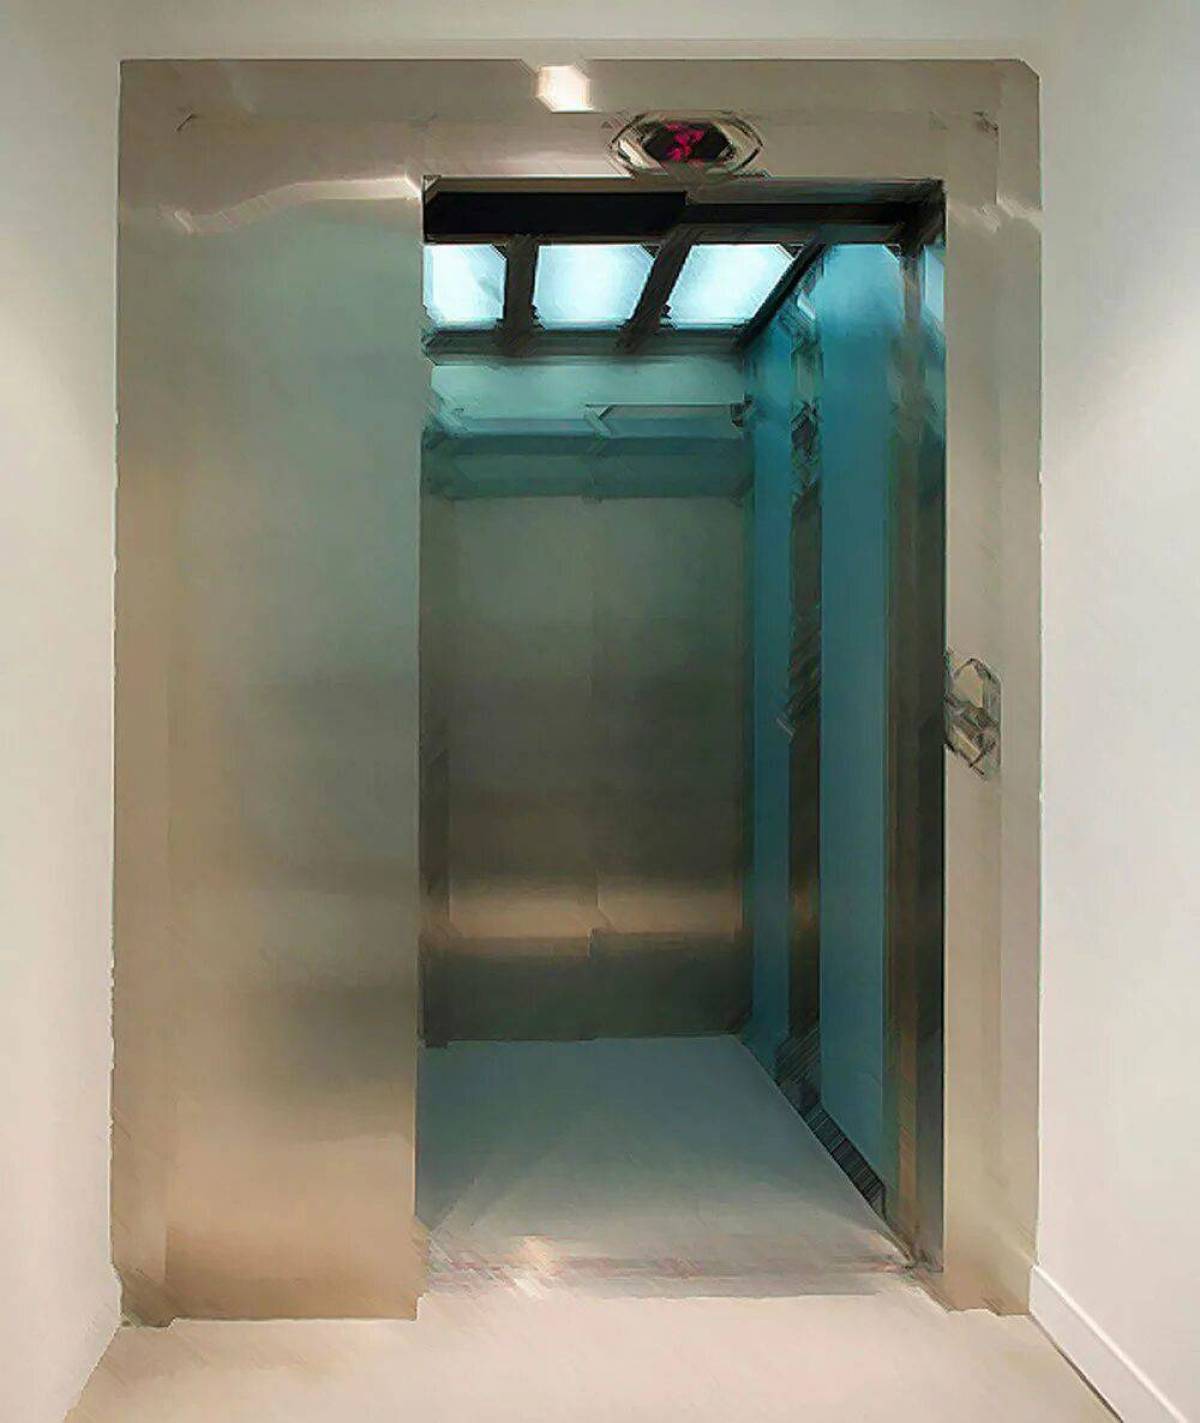 Elevator перевод. Лифт. Двери лифта. Открытый лифт. Пассажирский лифт.